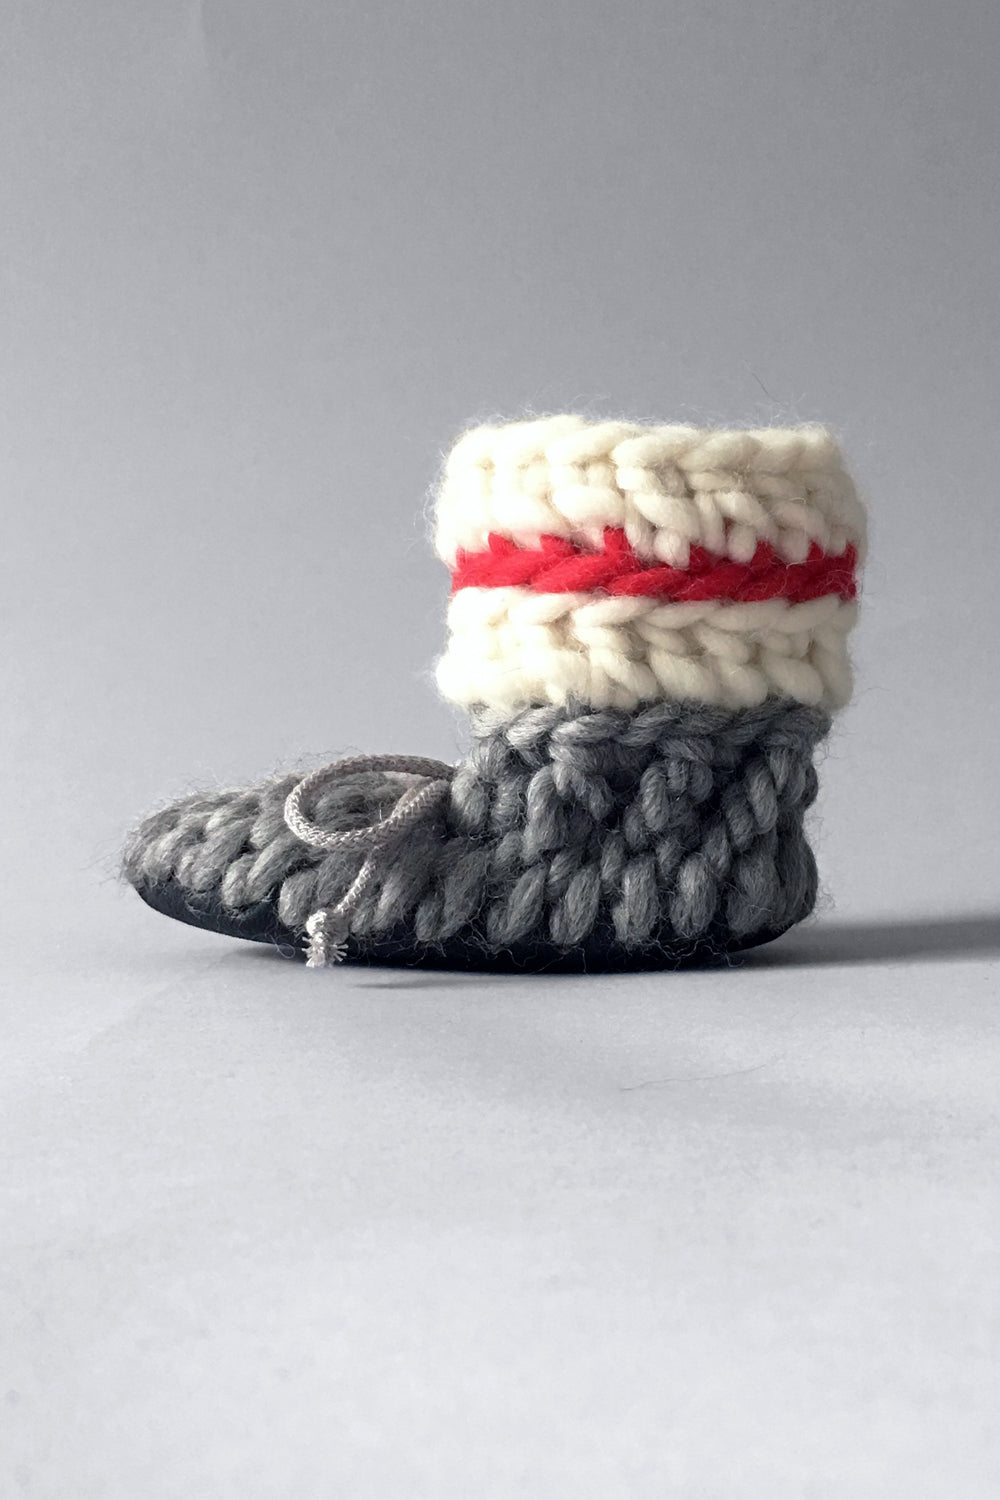 Merino Wool Baby Booties, Sock Monkey Slipper Boots for Kids